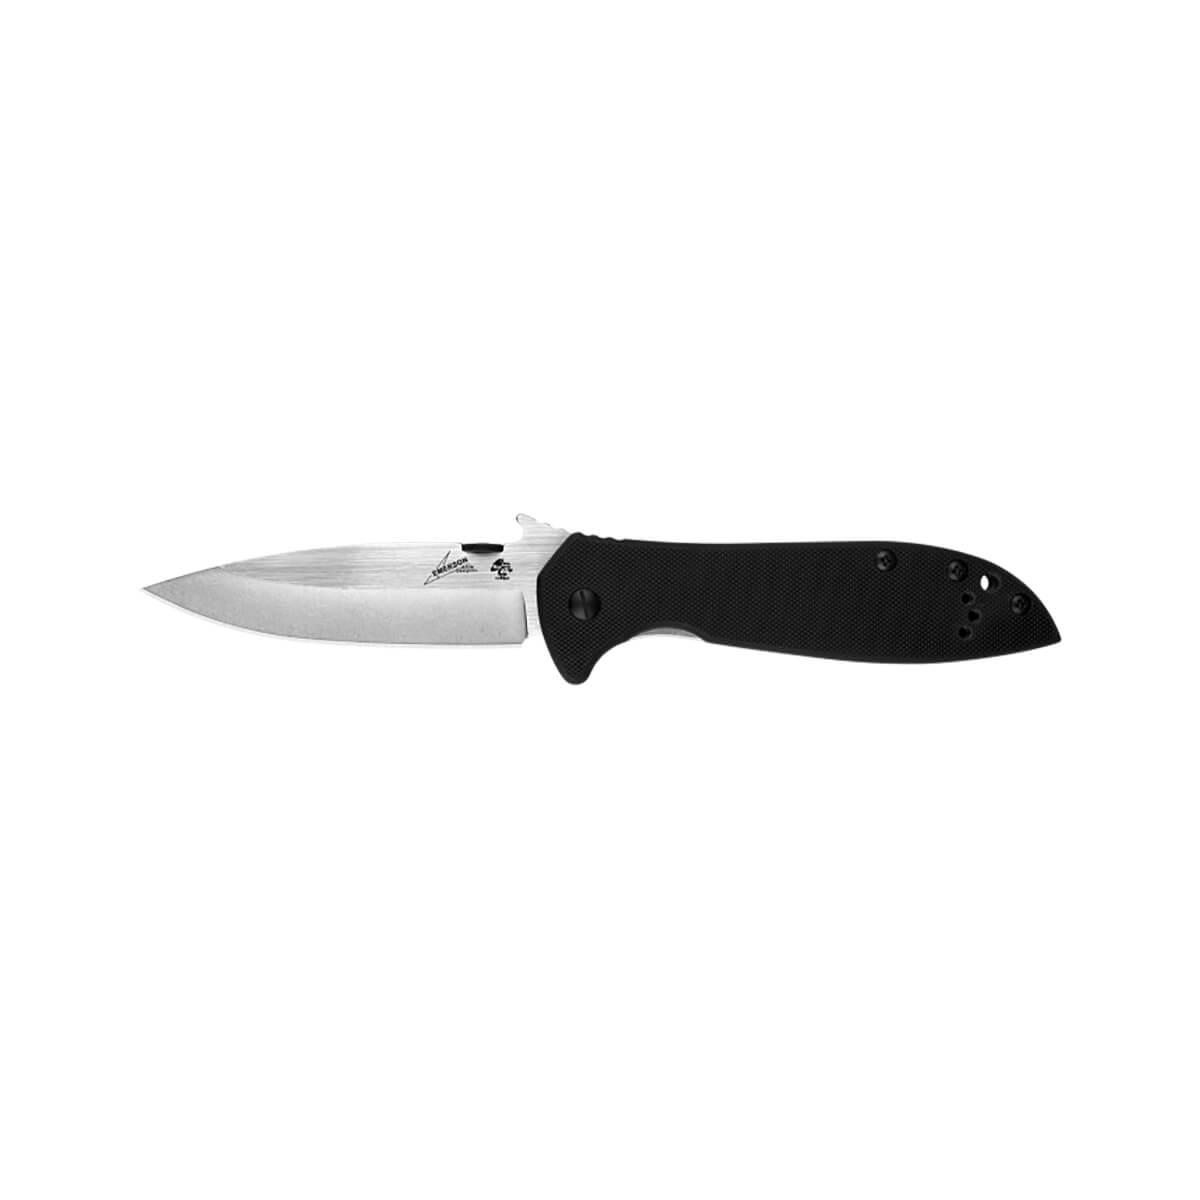  Emerson Cqc- 4kxl D2 Knife